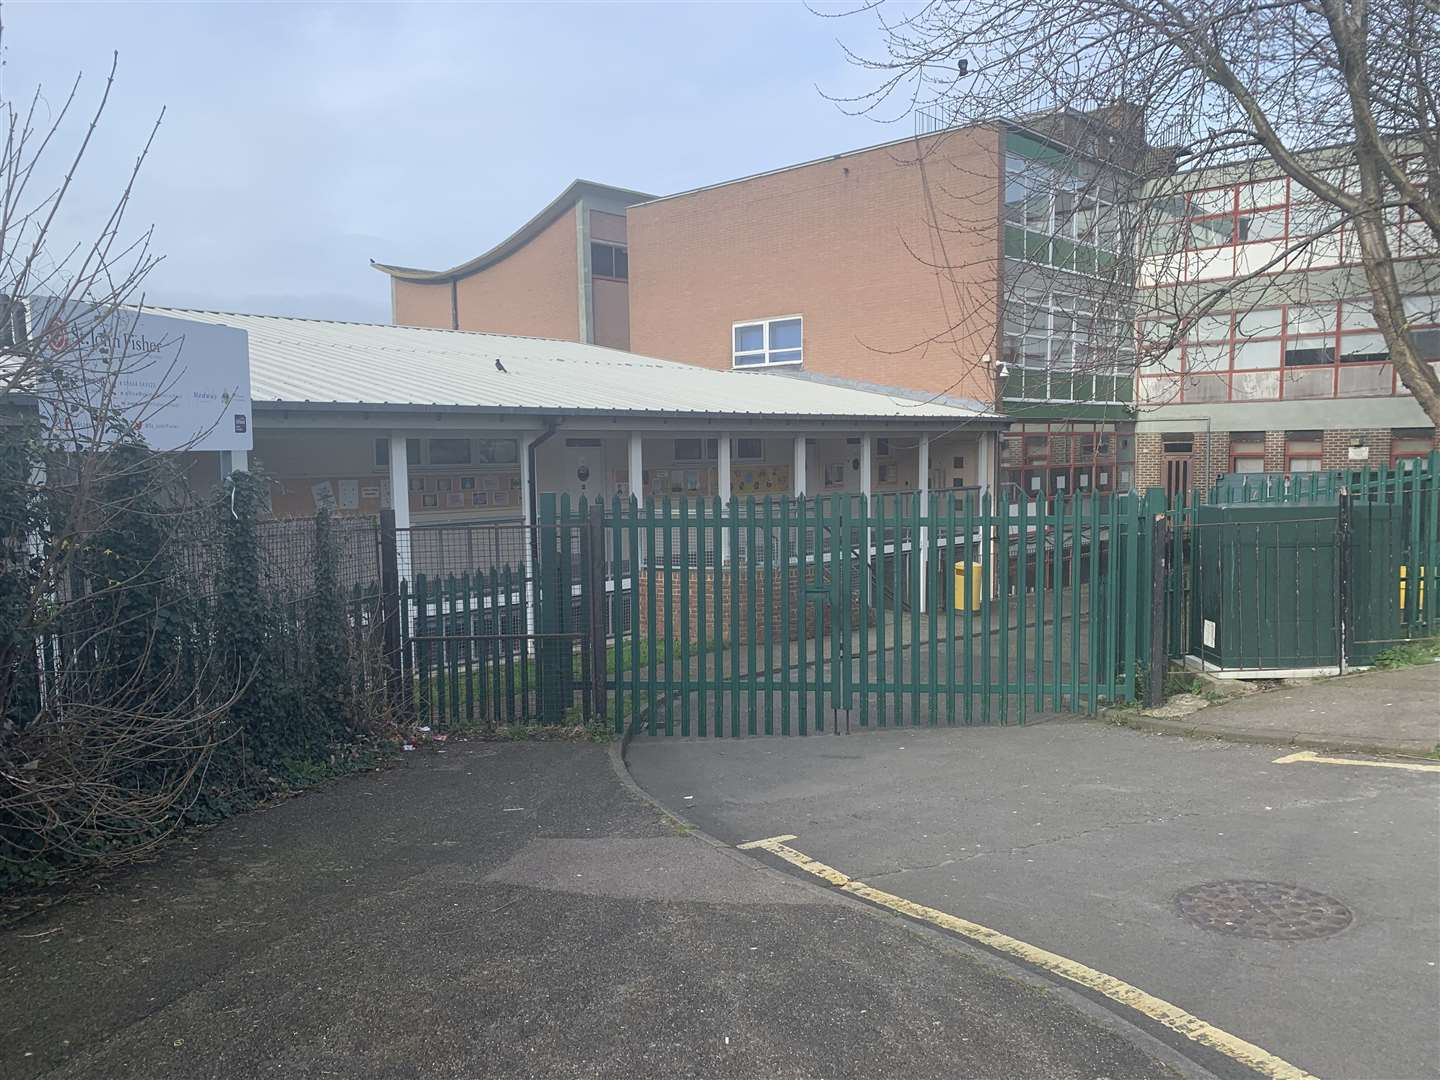 St John Fisher School in Chatham